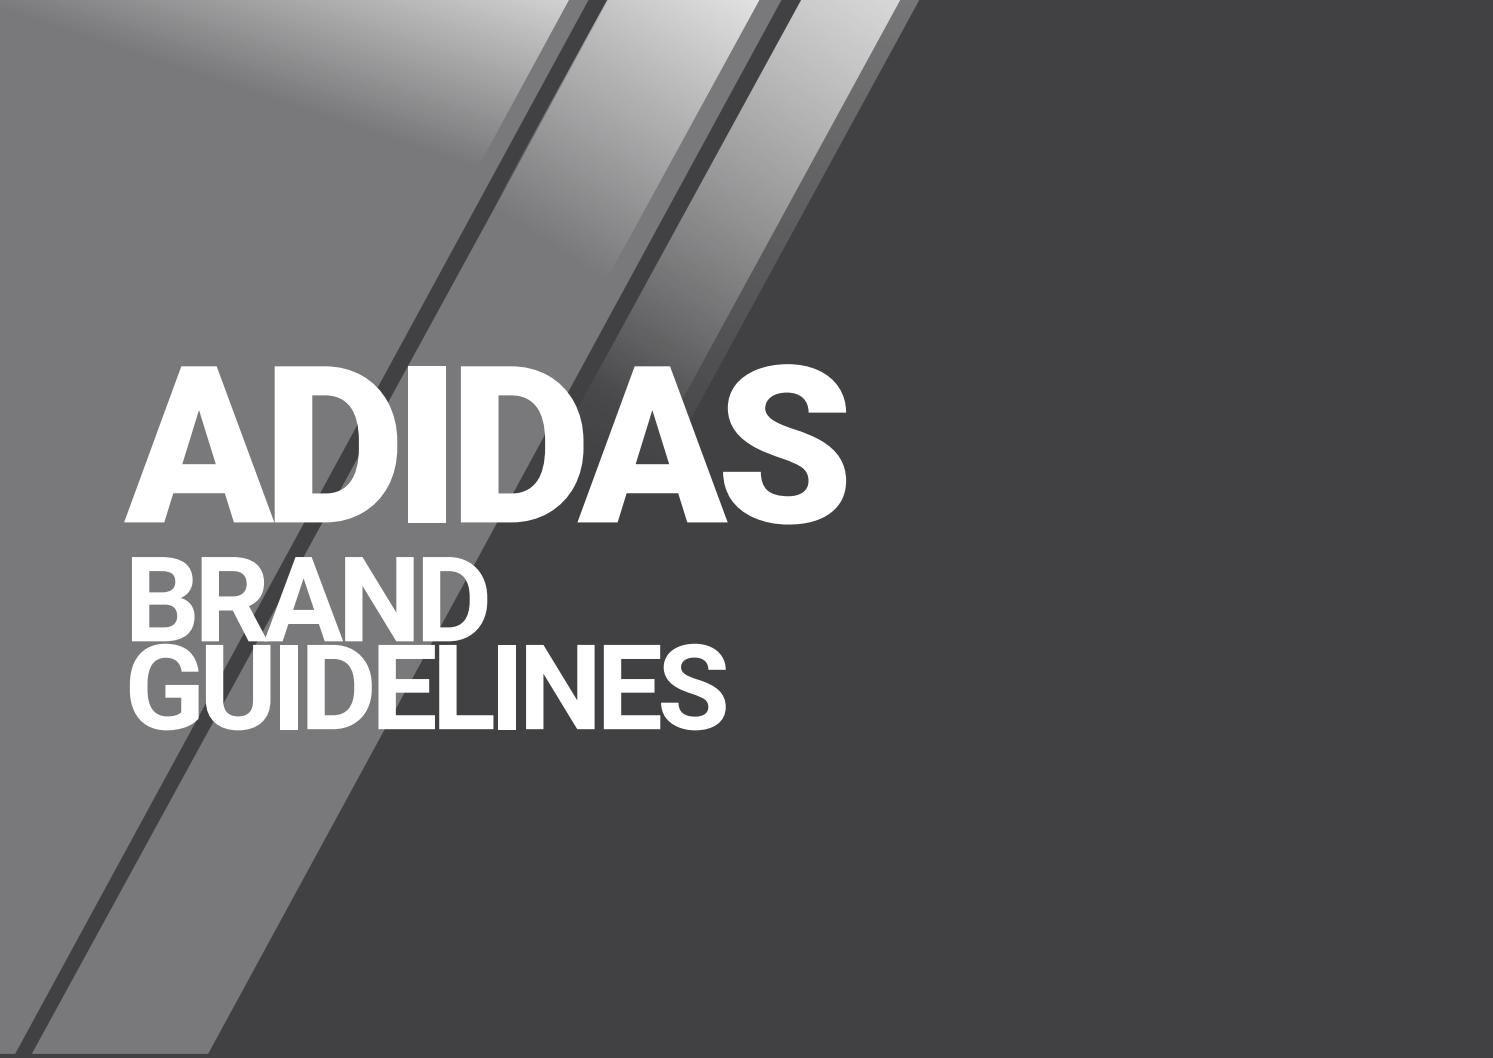 Adidas Brand Logo - Adidas Brand Guidelines by Chris Nguyen - issuu